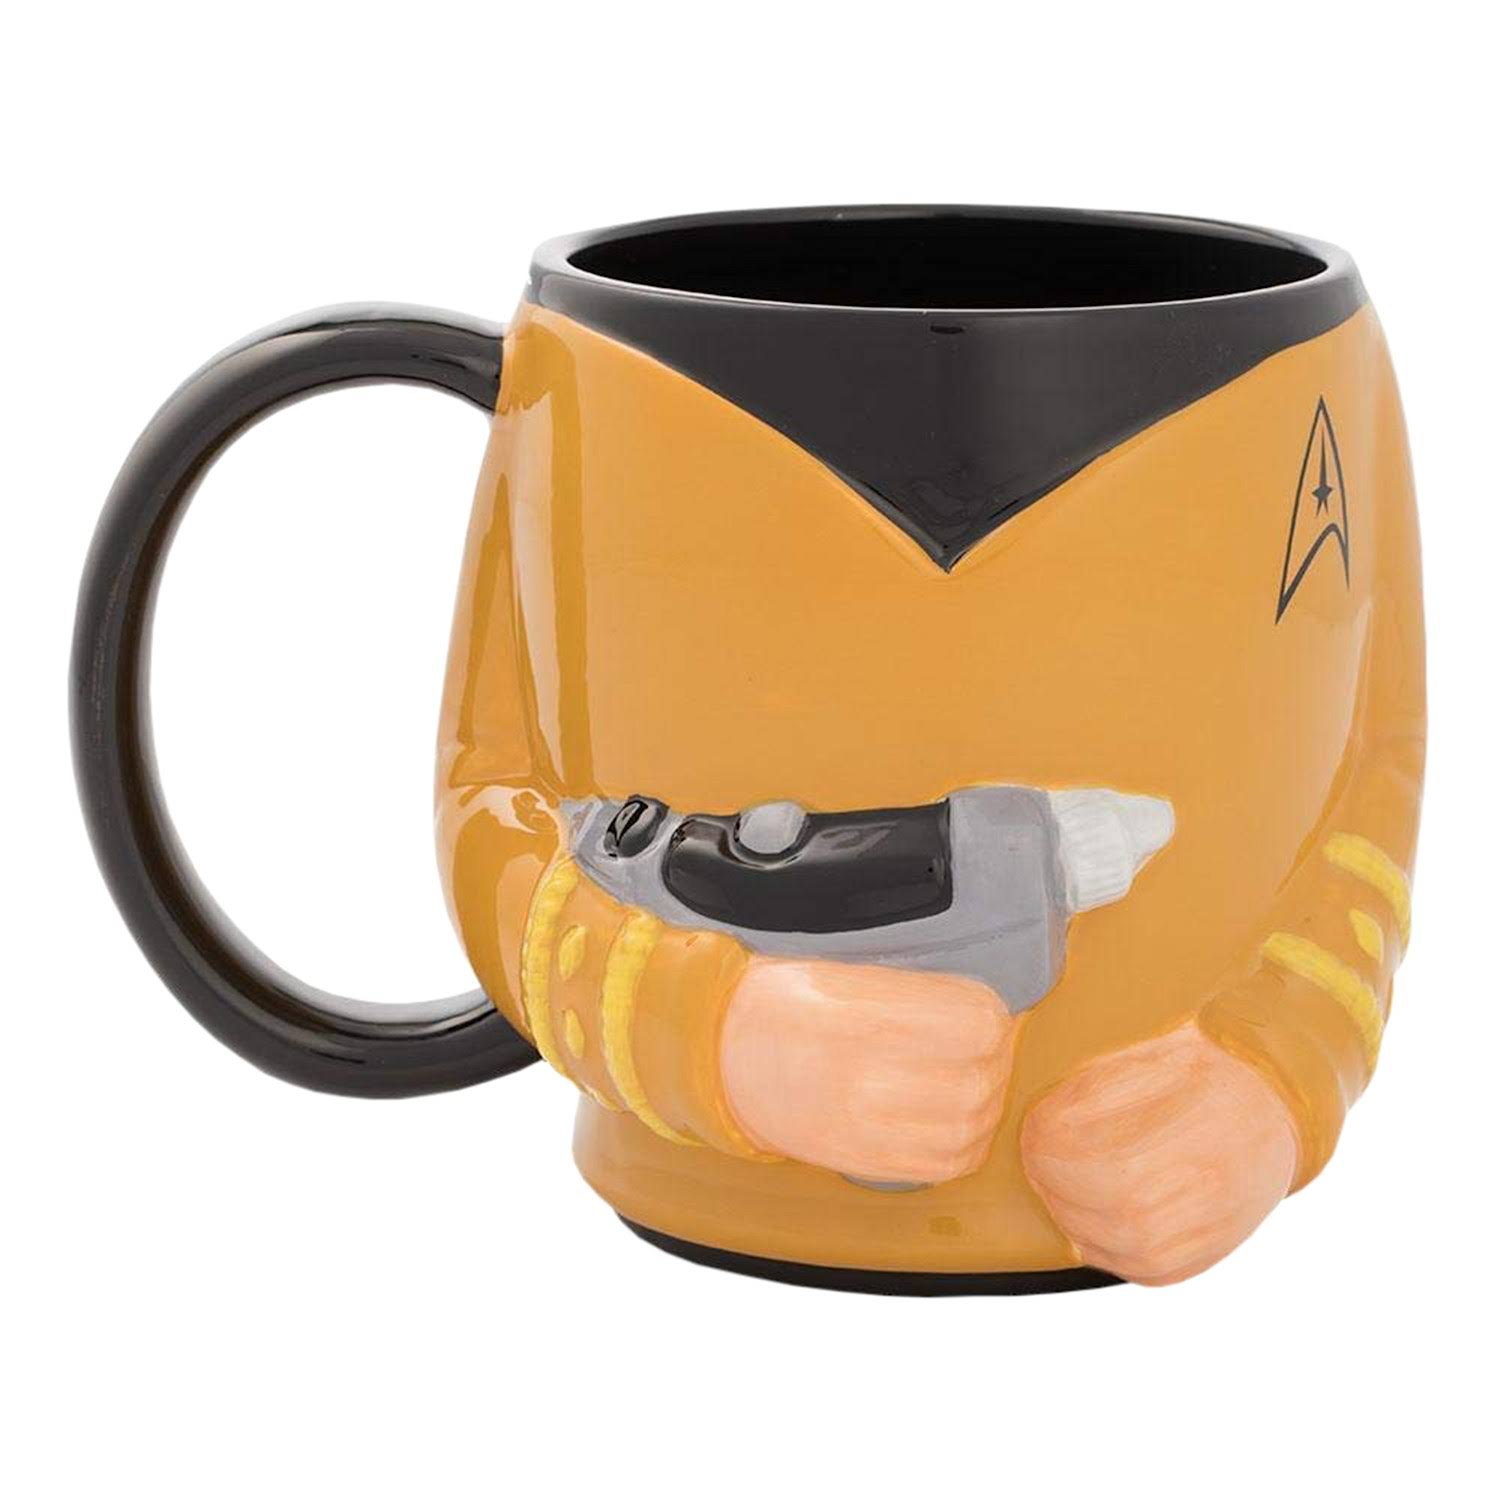 Vandor 55130 Marvel Deadpool 20 oz Ceramic Mug 